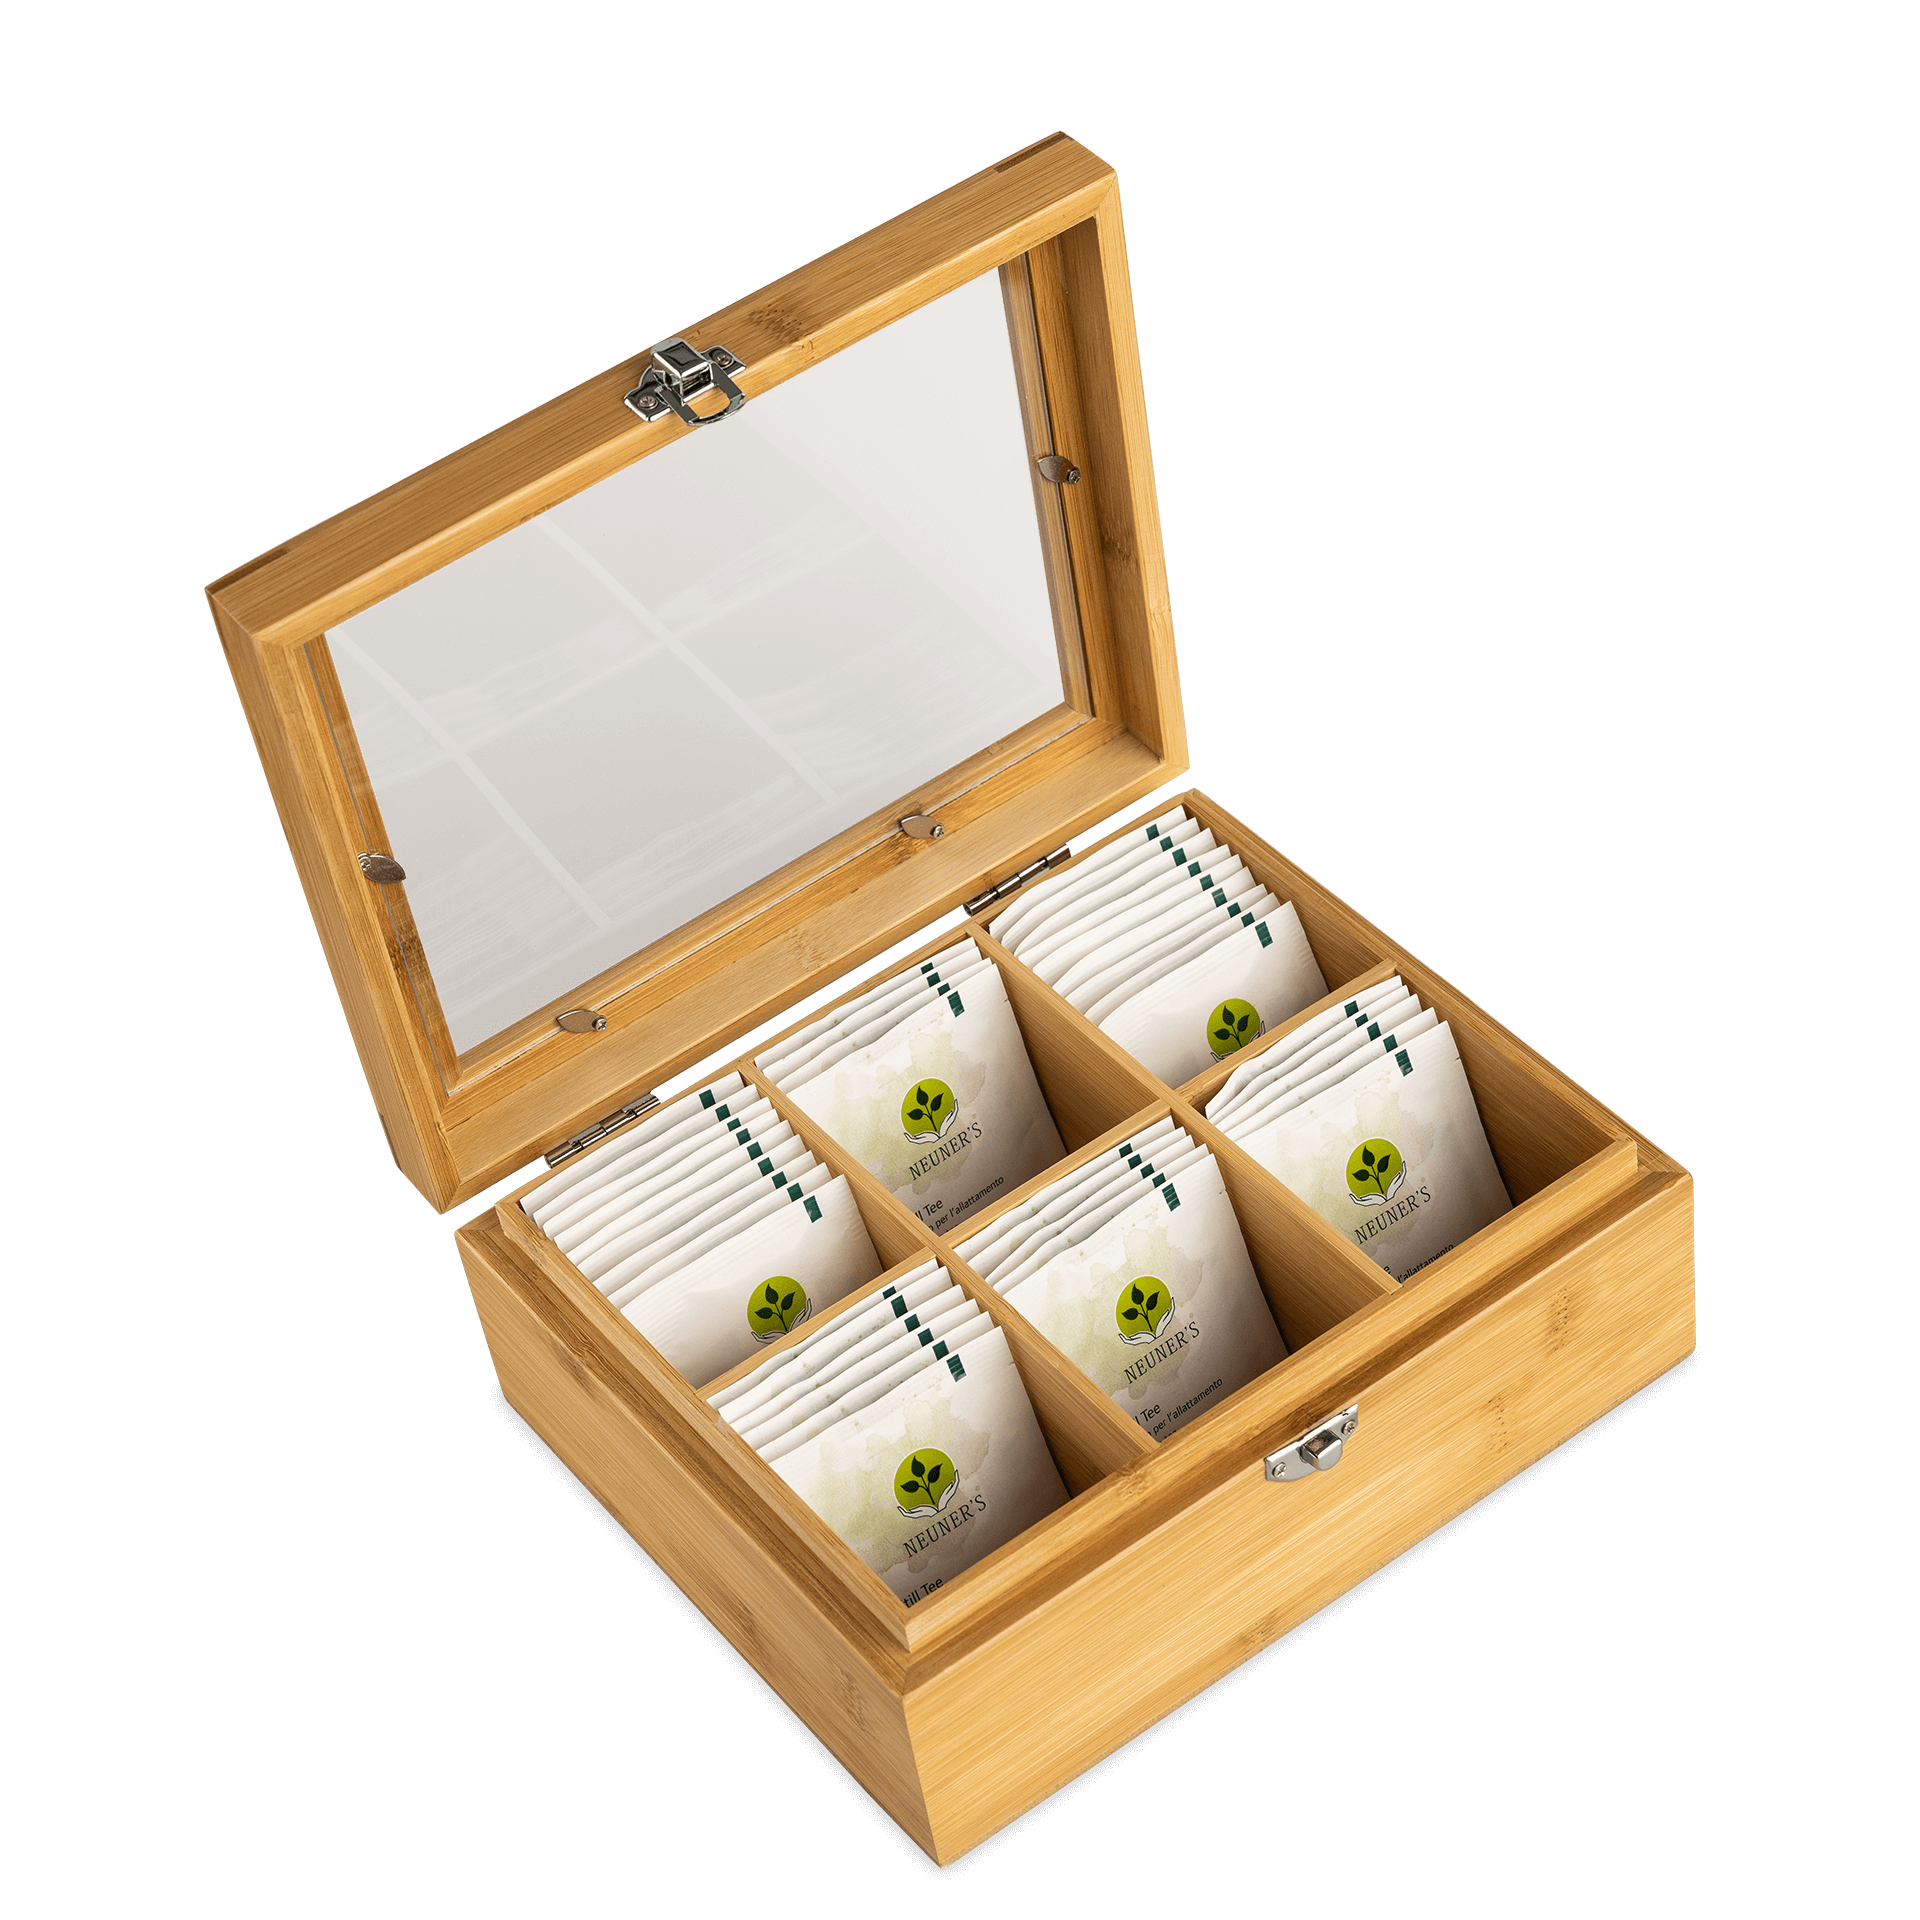 Bamboo tea box